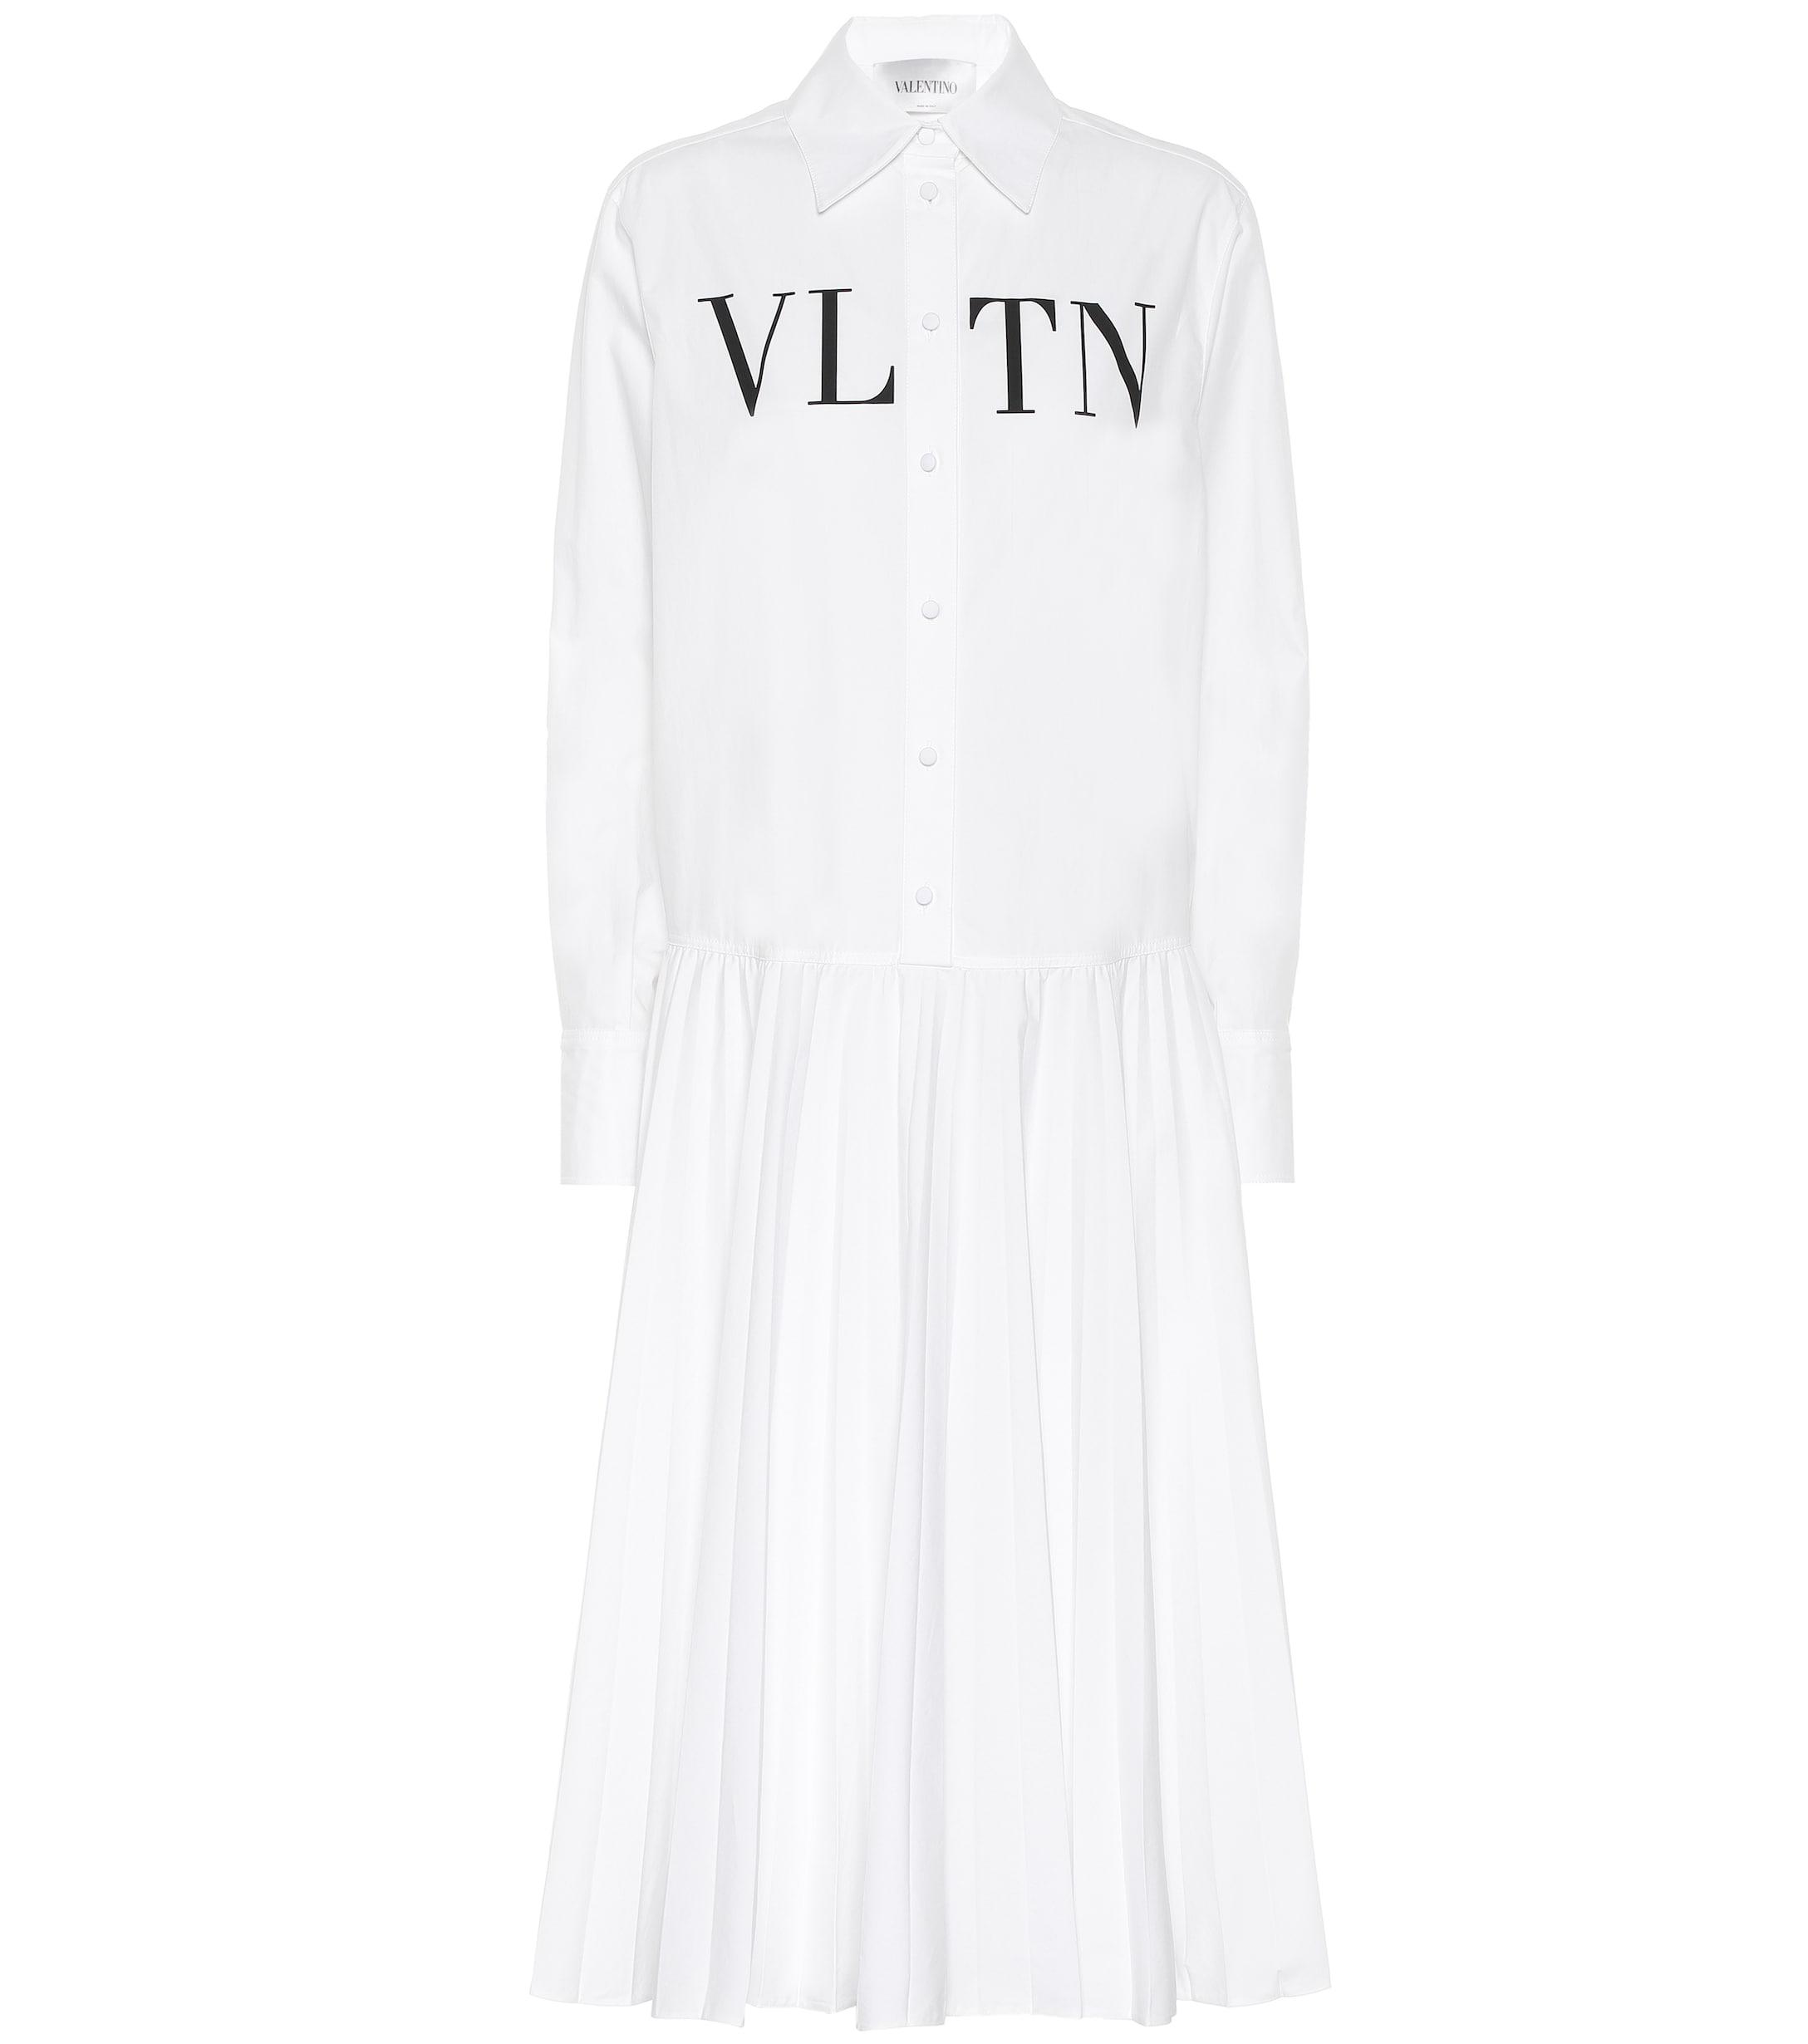 Valentino Vltn Cotton Shirt Dress in White - Lyst